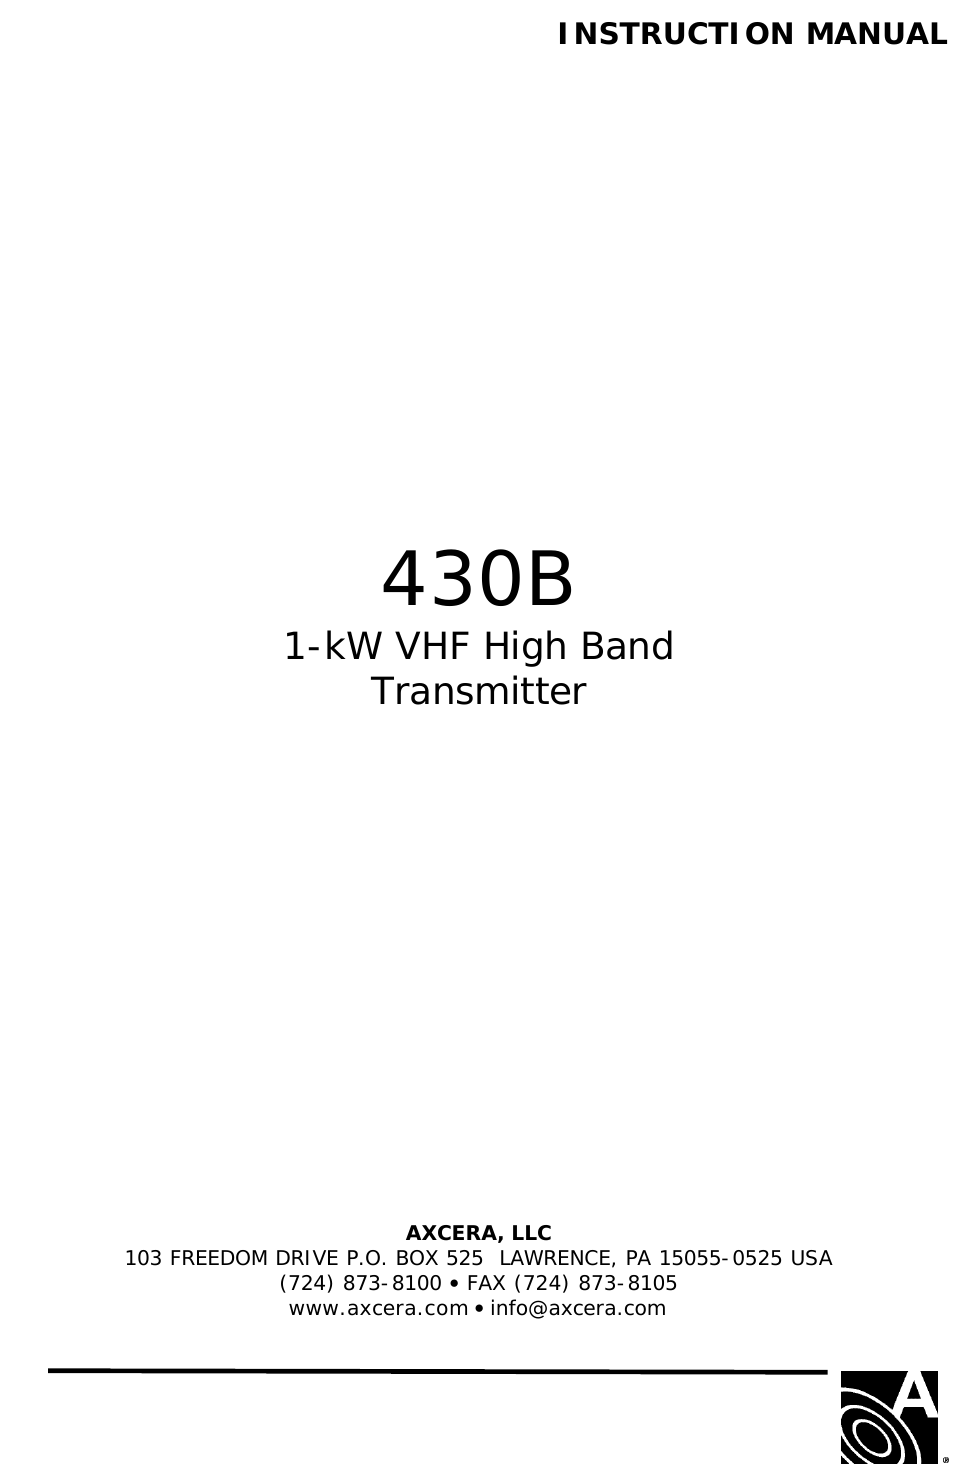   INSTRUCTION MANUAL                     430B 1-kW VHF High Band Transmitter                AXCERA, LLC  103 FREEDOM DRIVE P.O. BOX 525  LAWRENCE, PA 15055-0525 USA (724) 873-8100 • FAX (724) 873-8105 www.axcera.com • info@axcera.com     